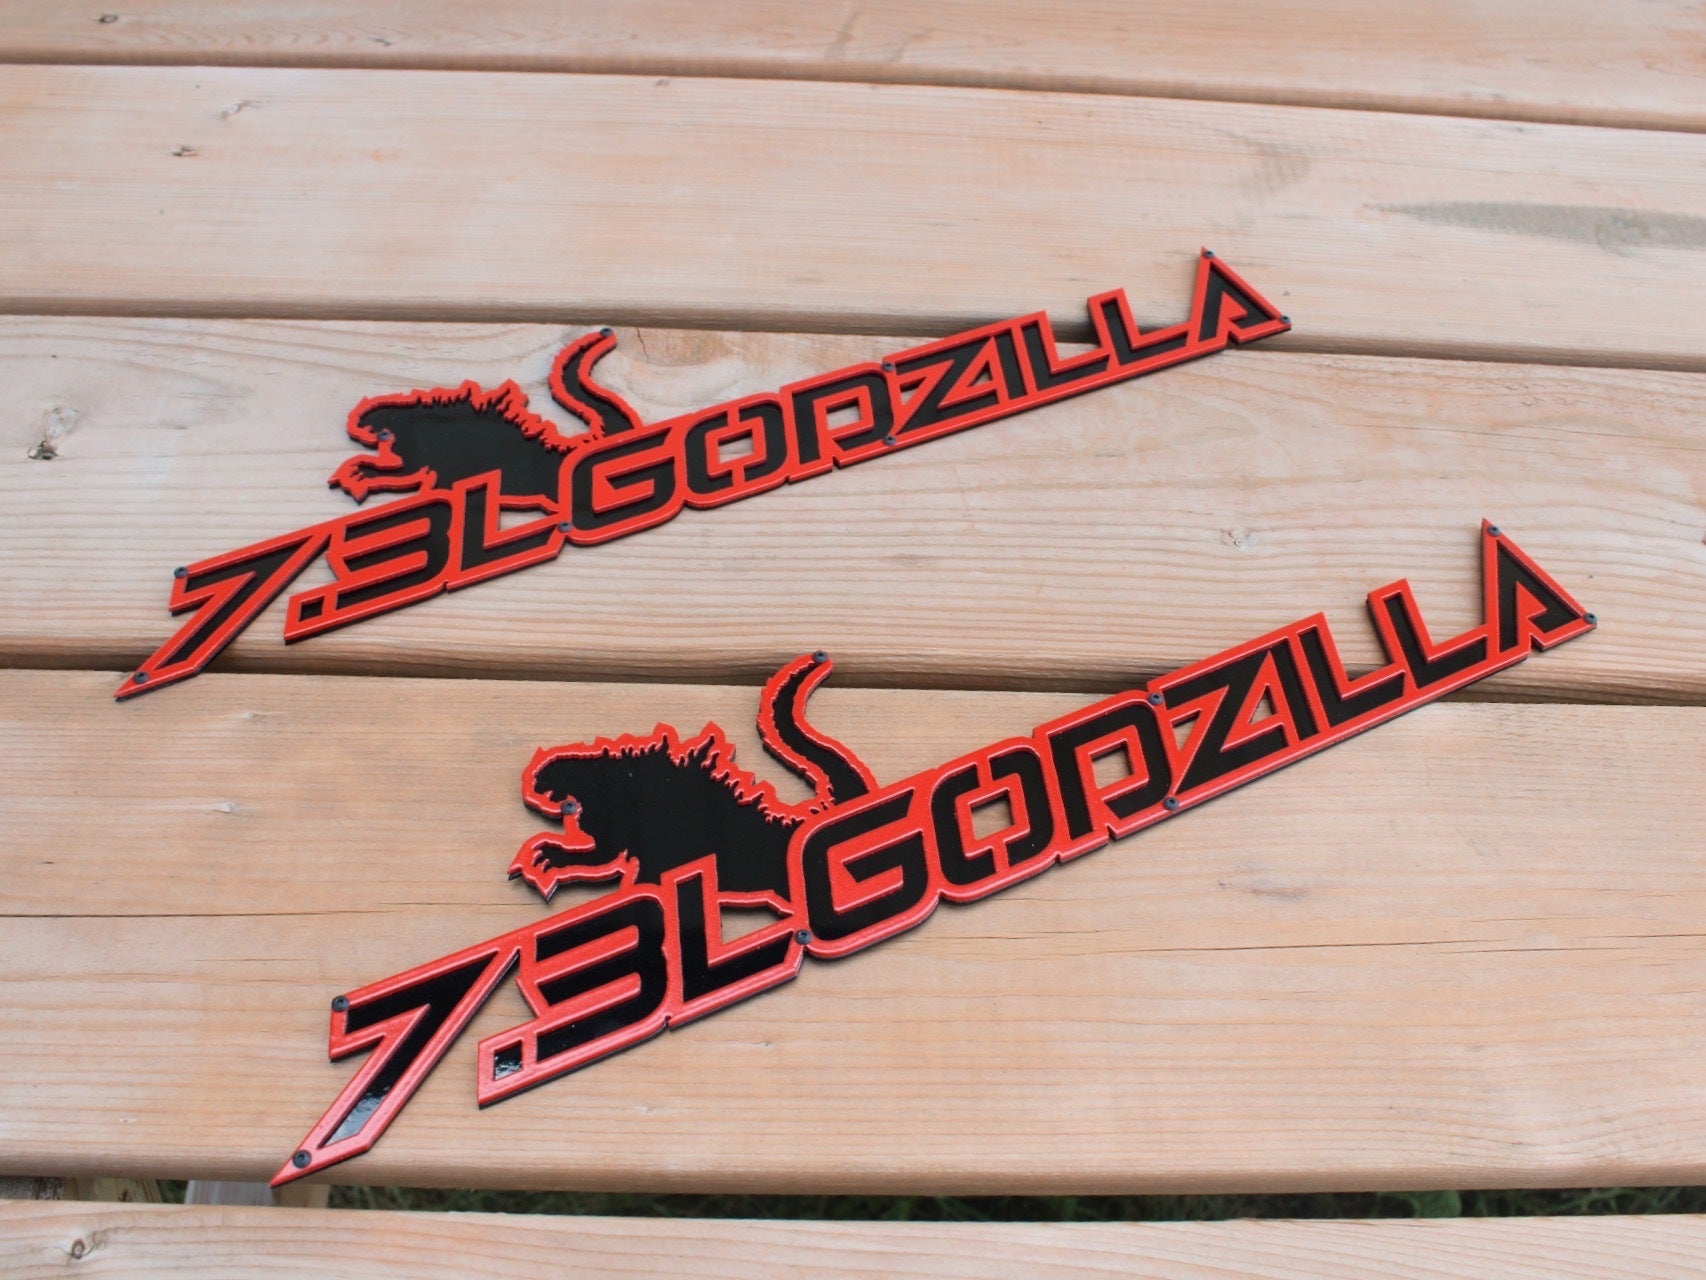 Godzilla sticker (new) · BunLeungArt · Online Store Powered by